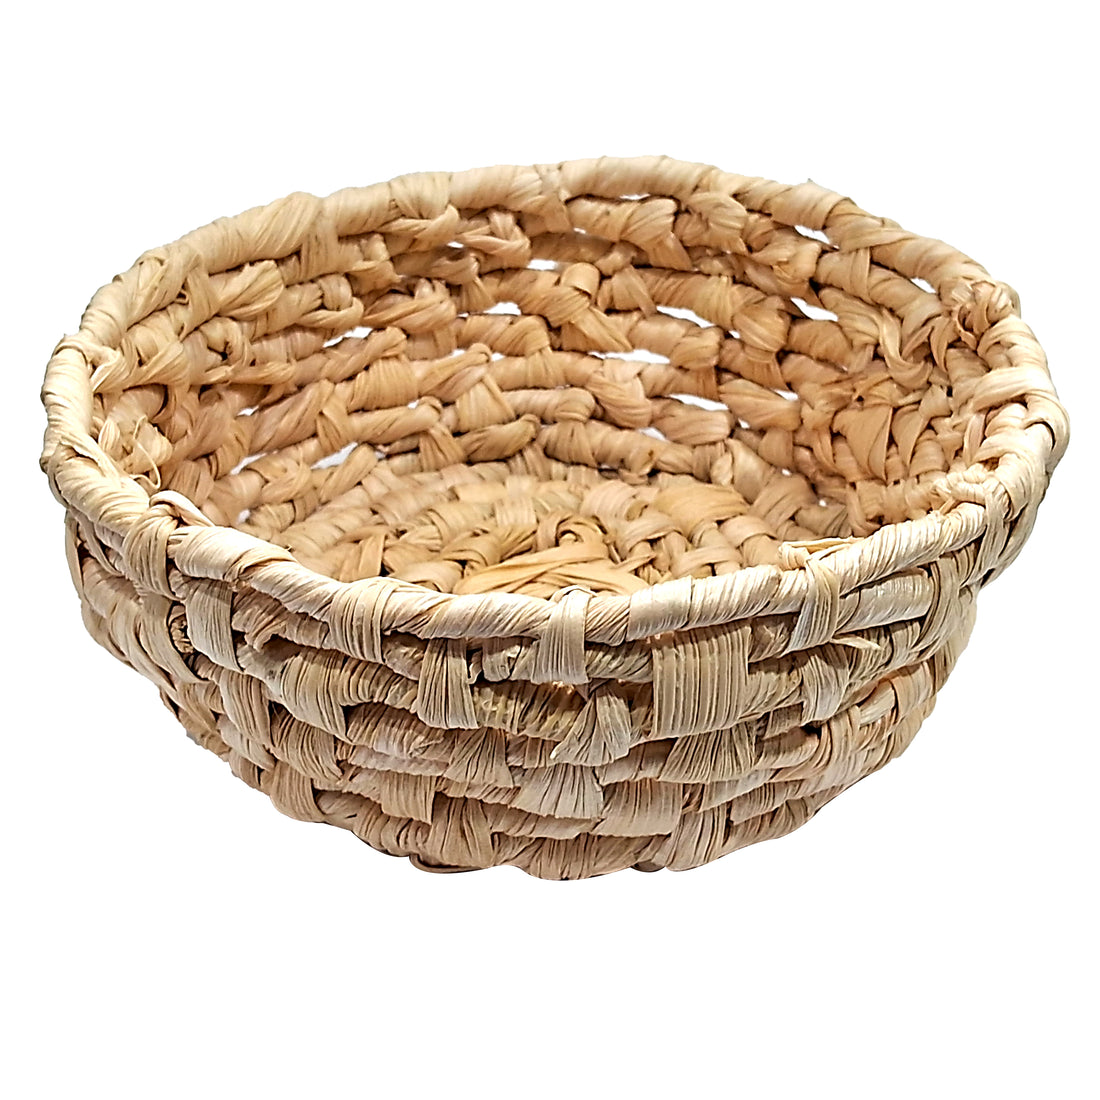 WHOLESALE Corn Husk Basket